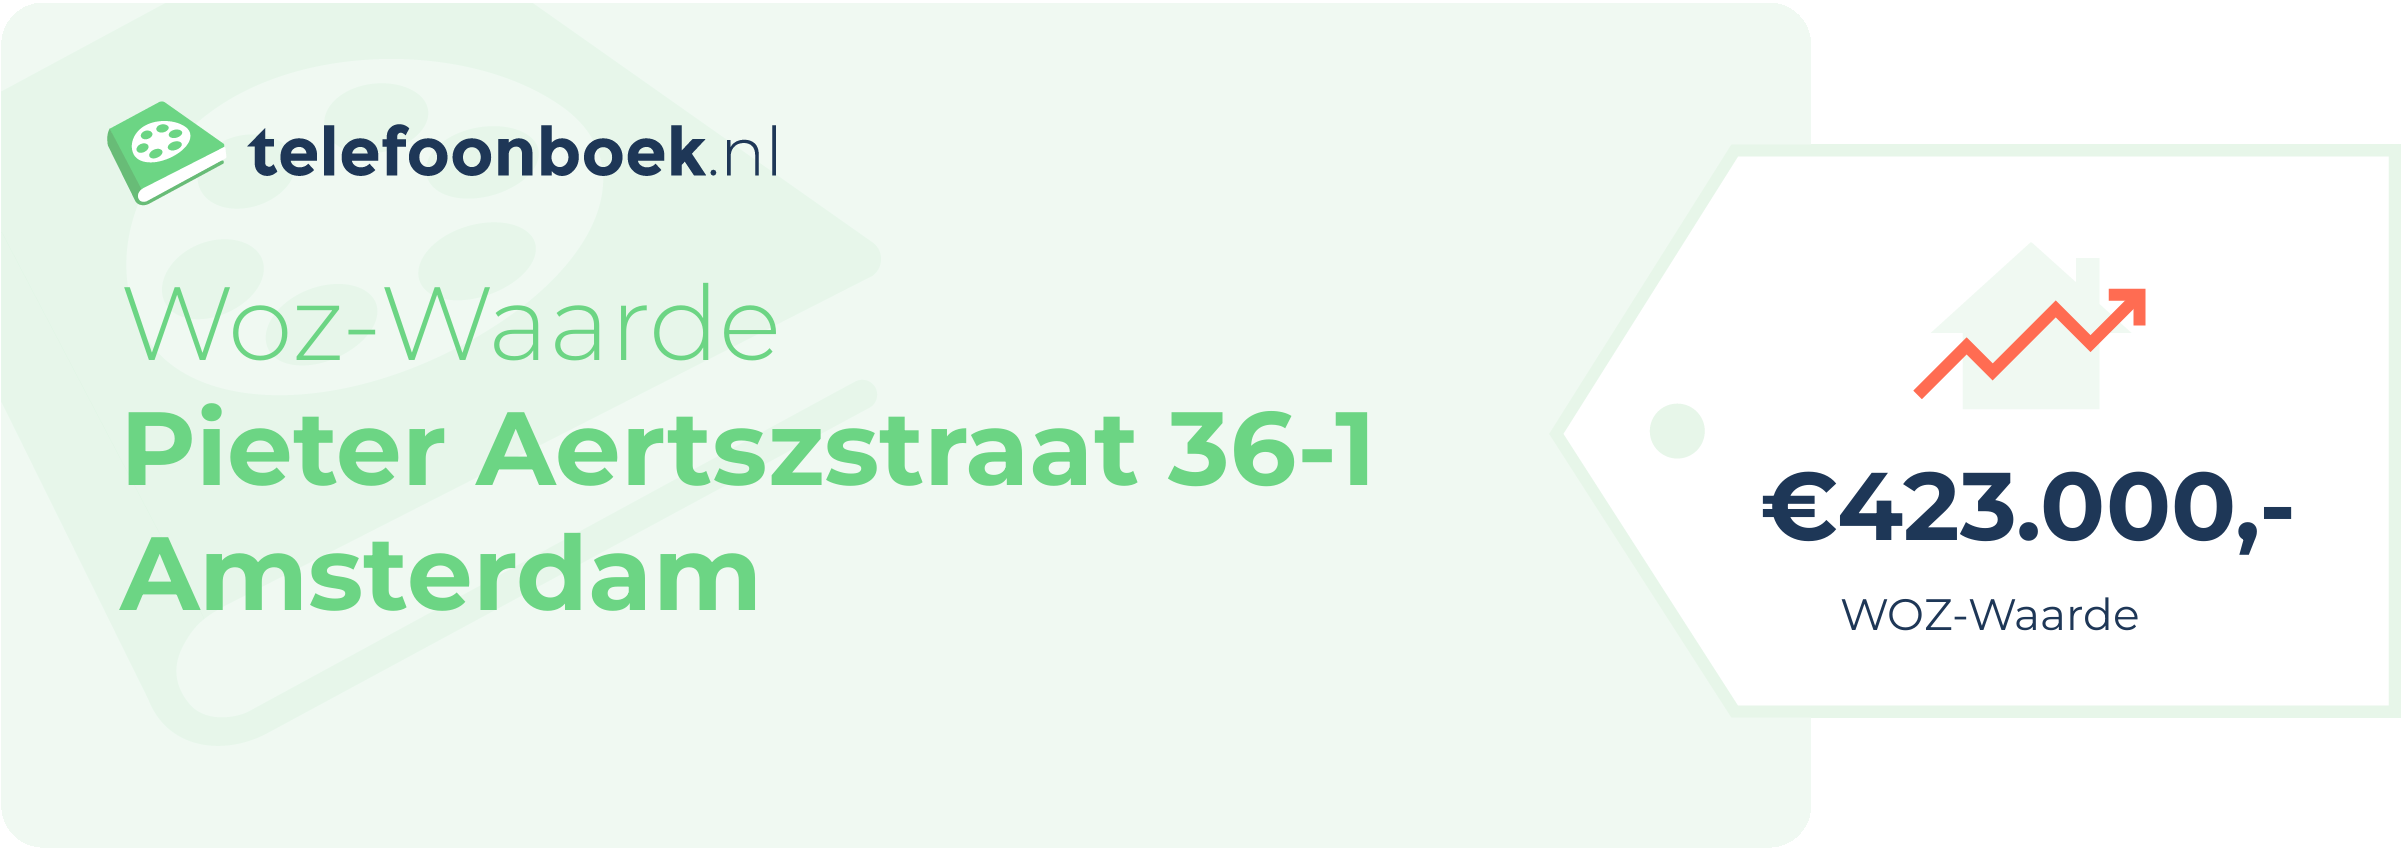 WOZ-waarde Pieter Aertszstraat 36-1 Amsterdam